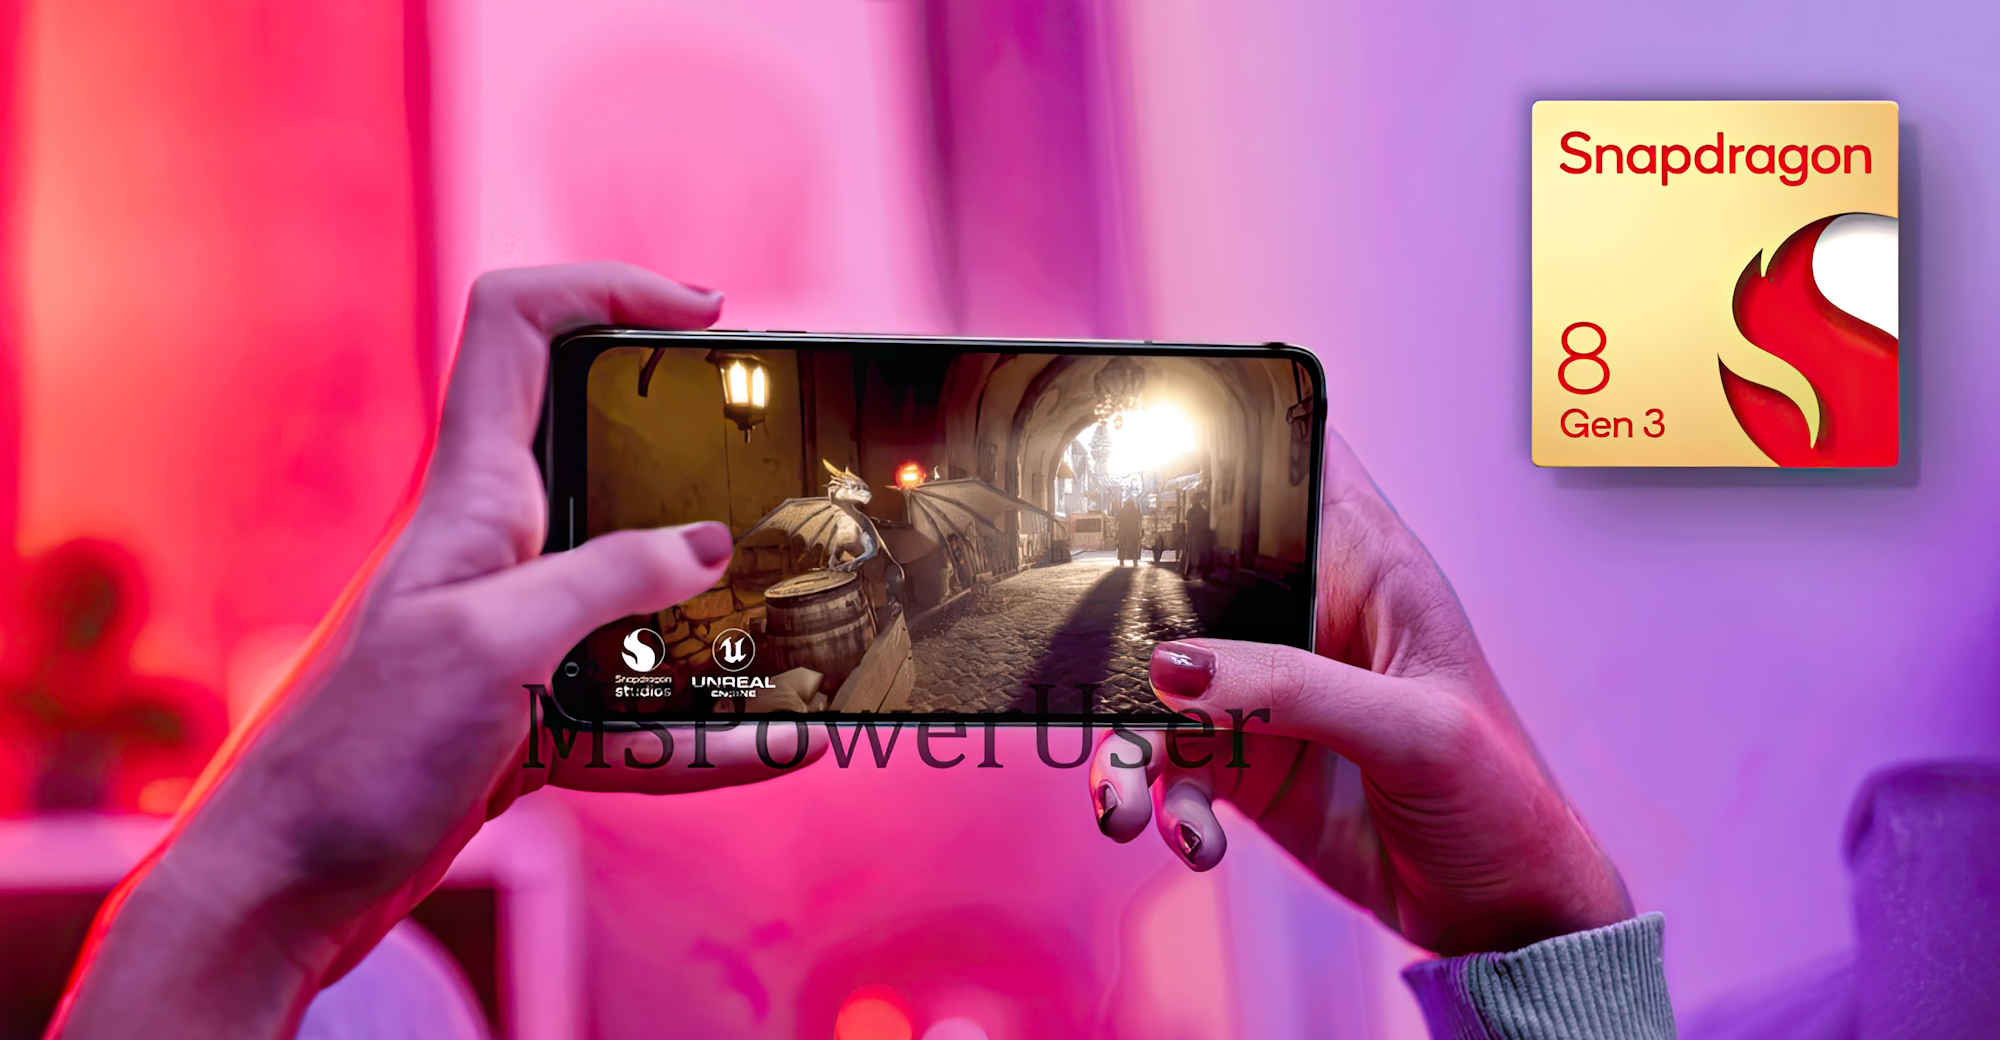 Qualcomm Snapdragon 8 Gen 3 flagship mobile SoC teased with Unreal Engine 5  Lumen support 